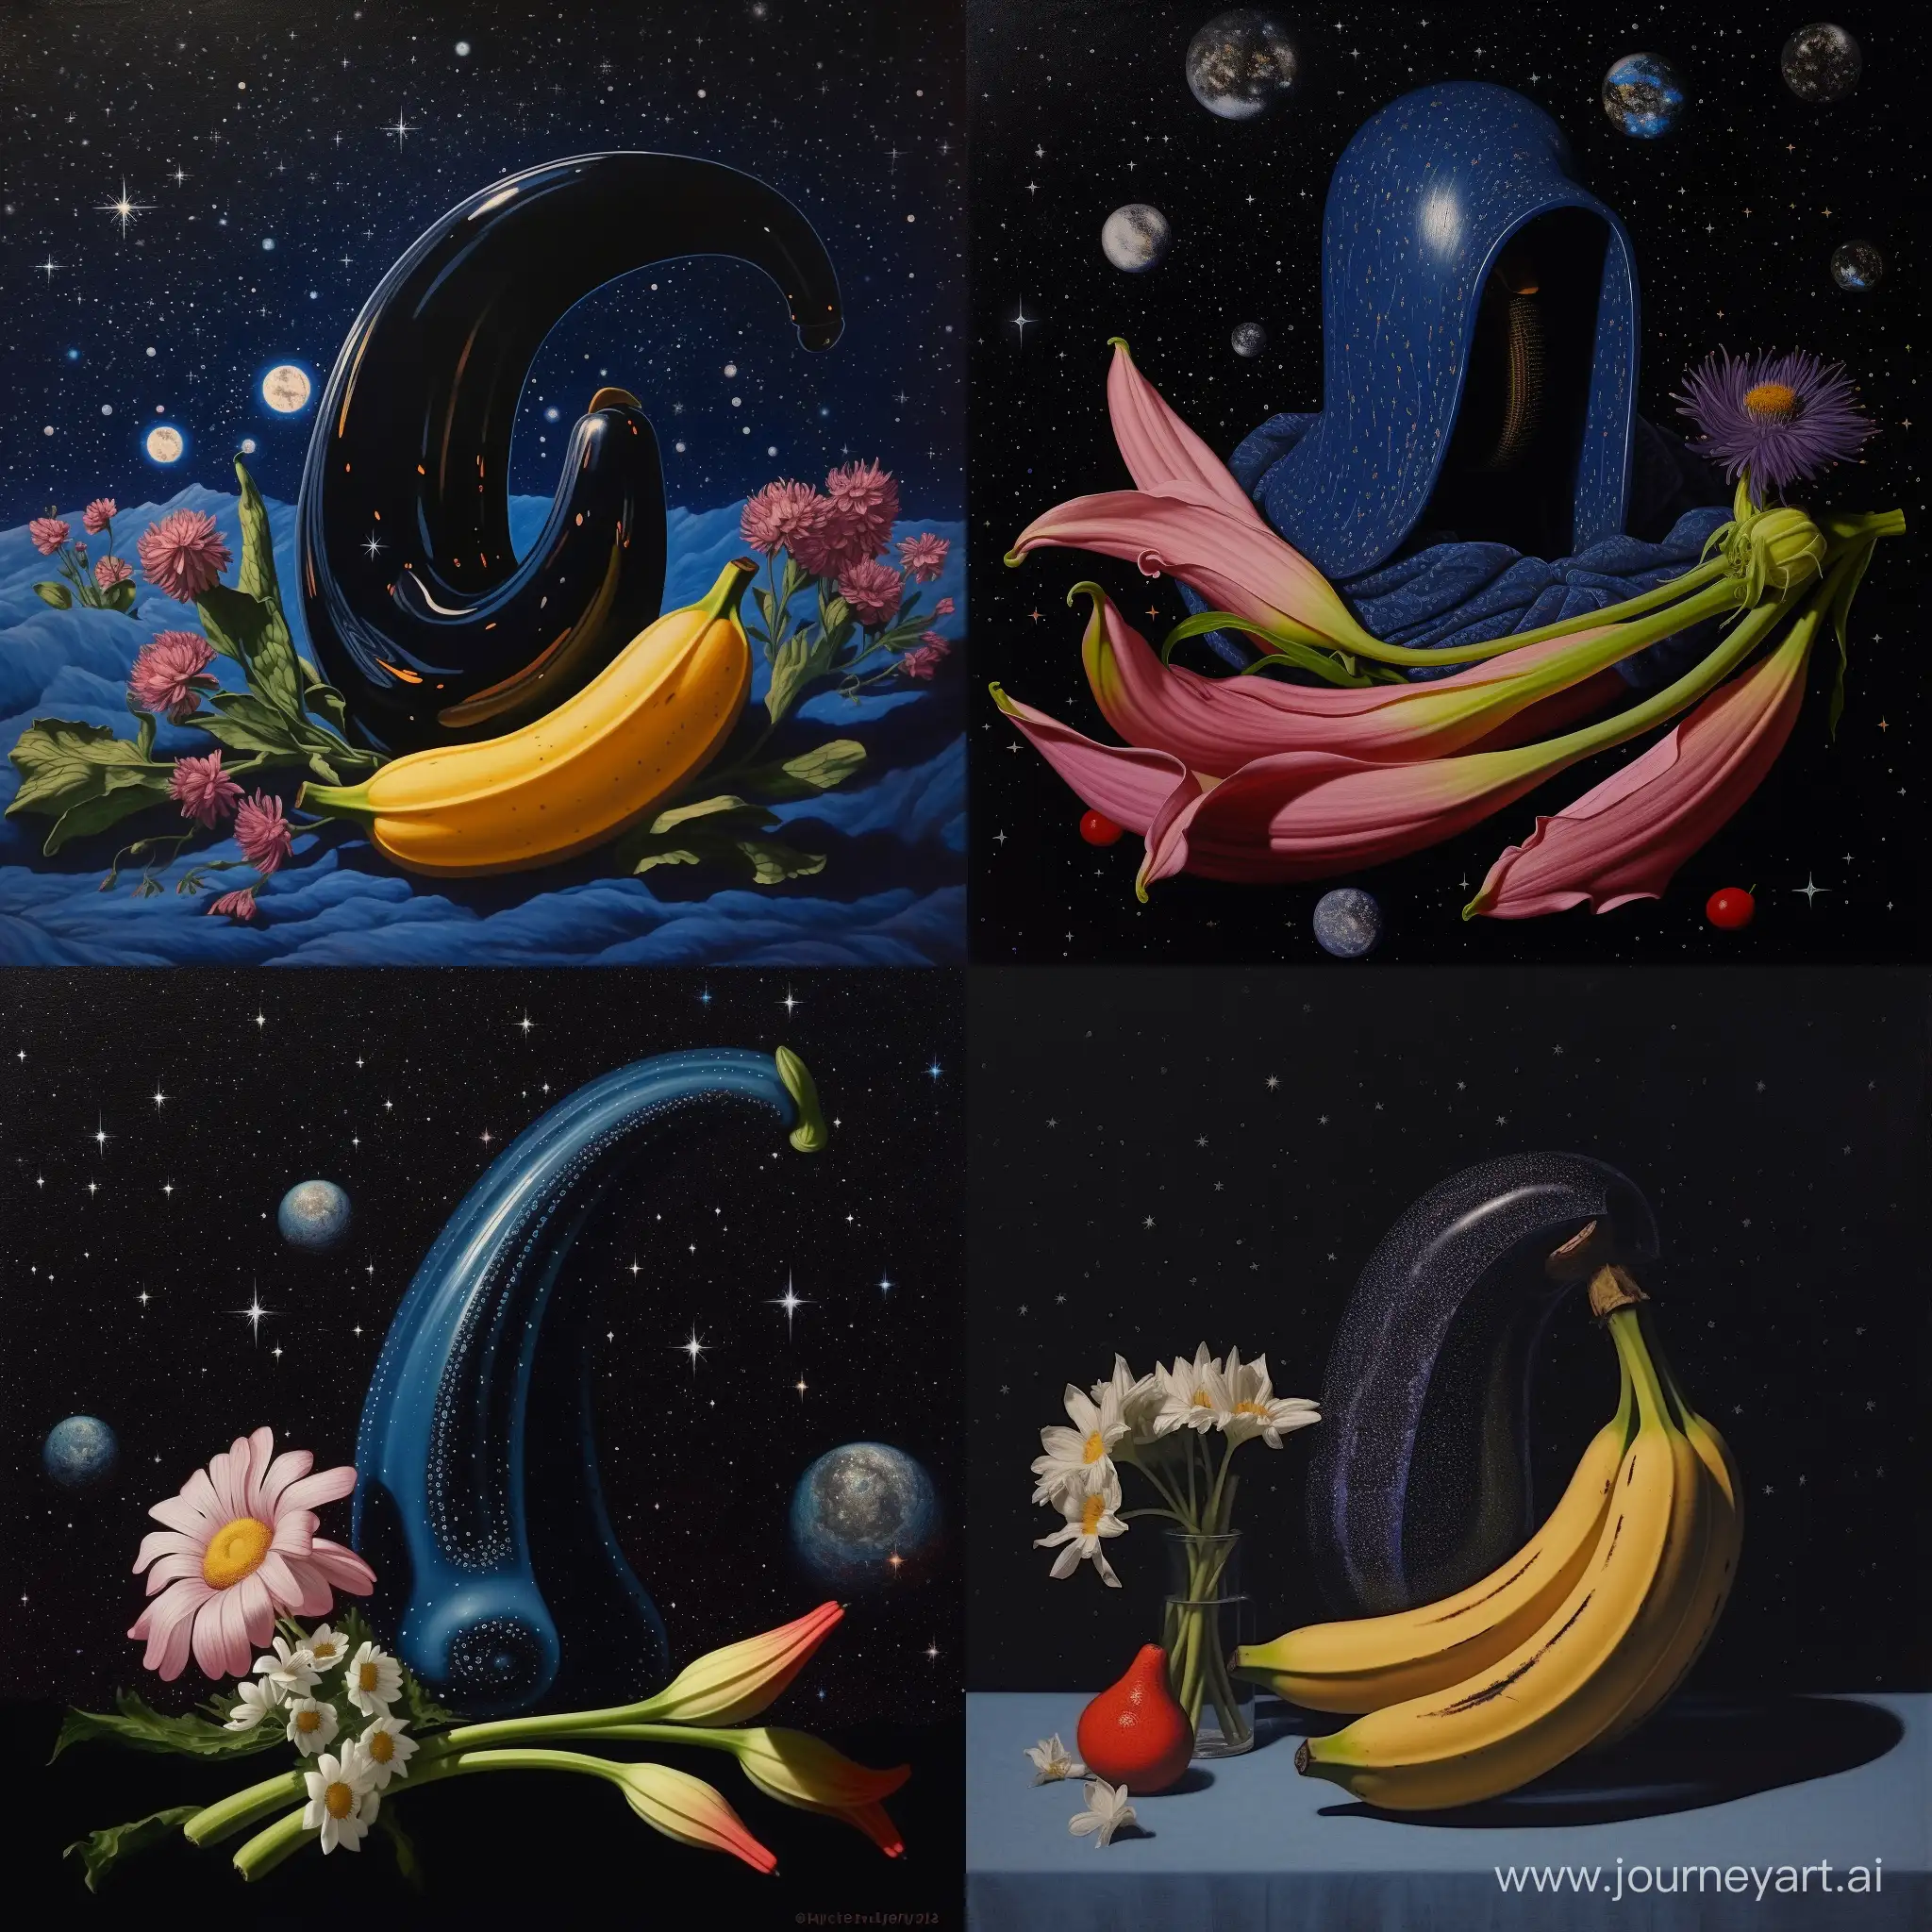 Unique-Cosmic-Scene-Black-Banana-with-Blue-Cap